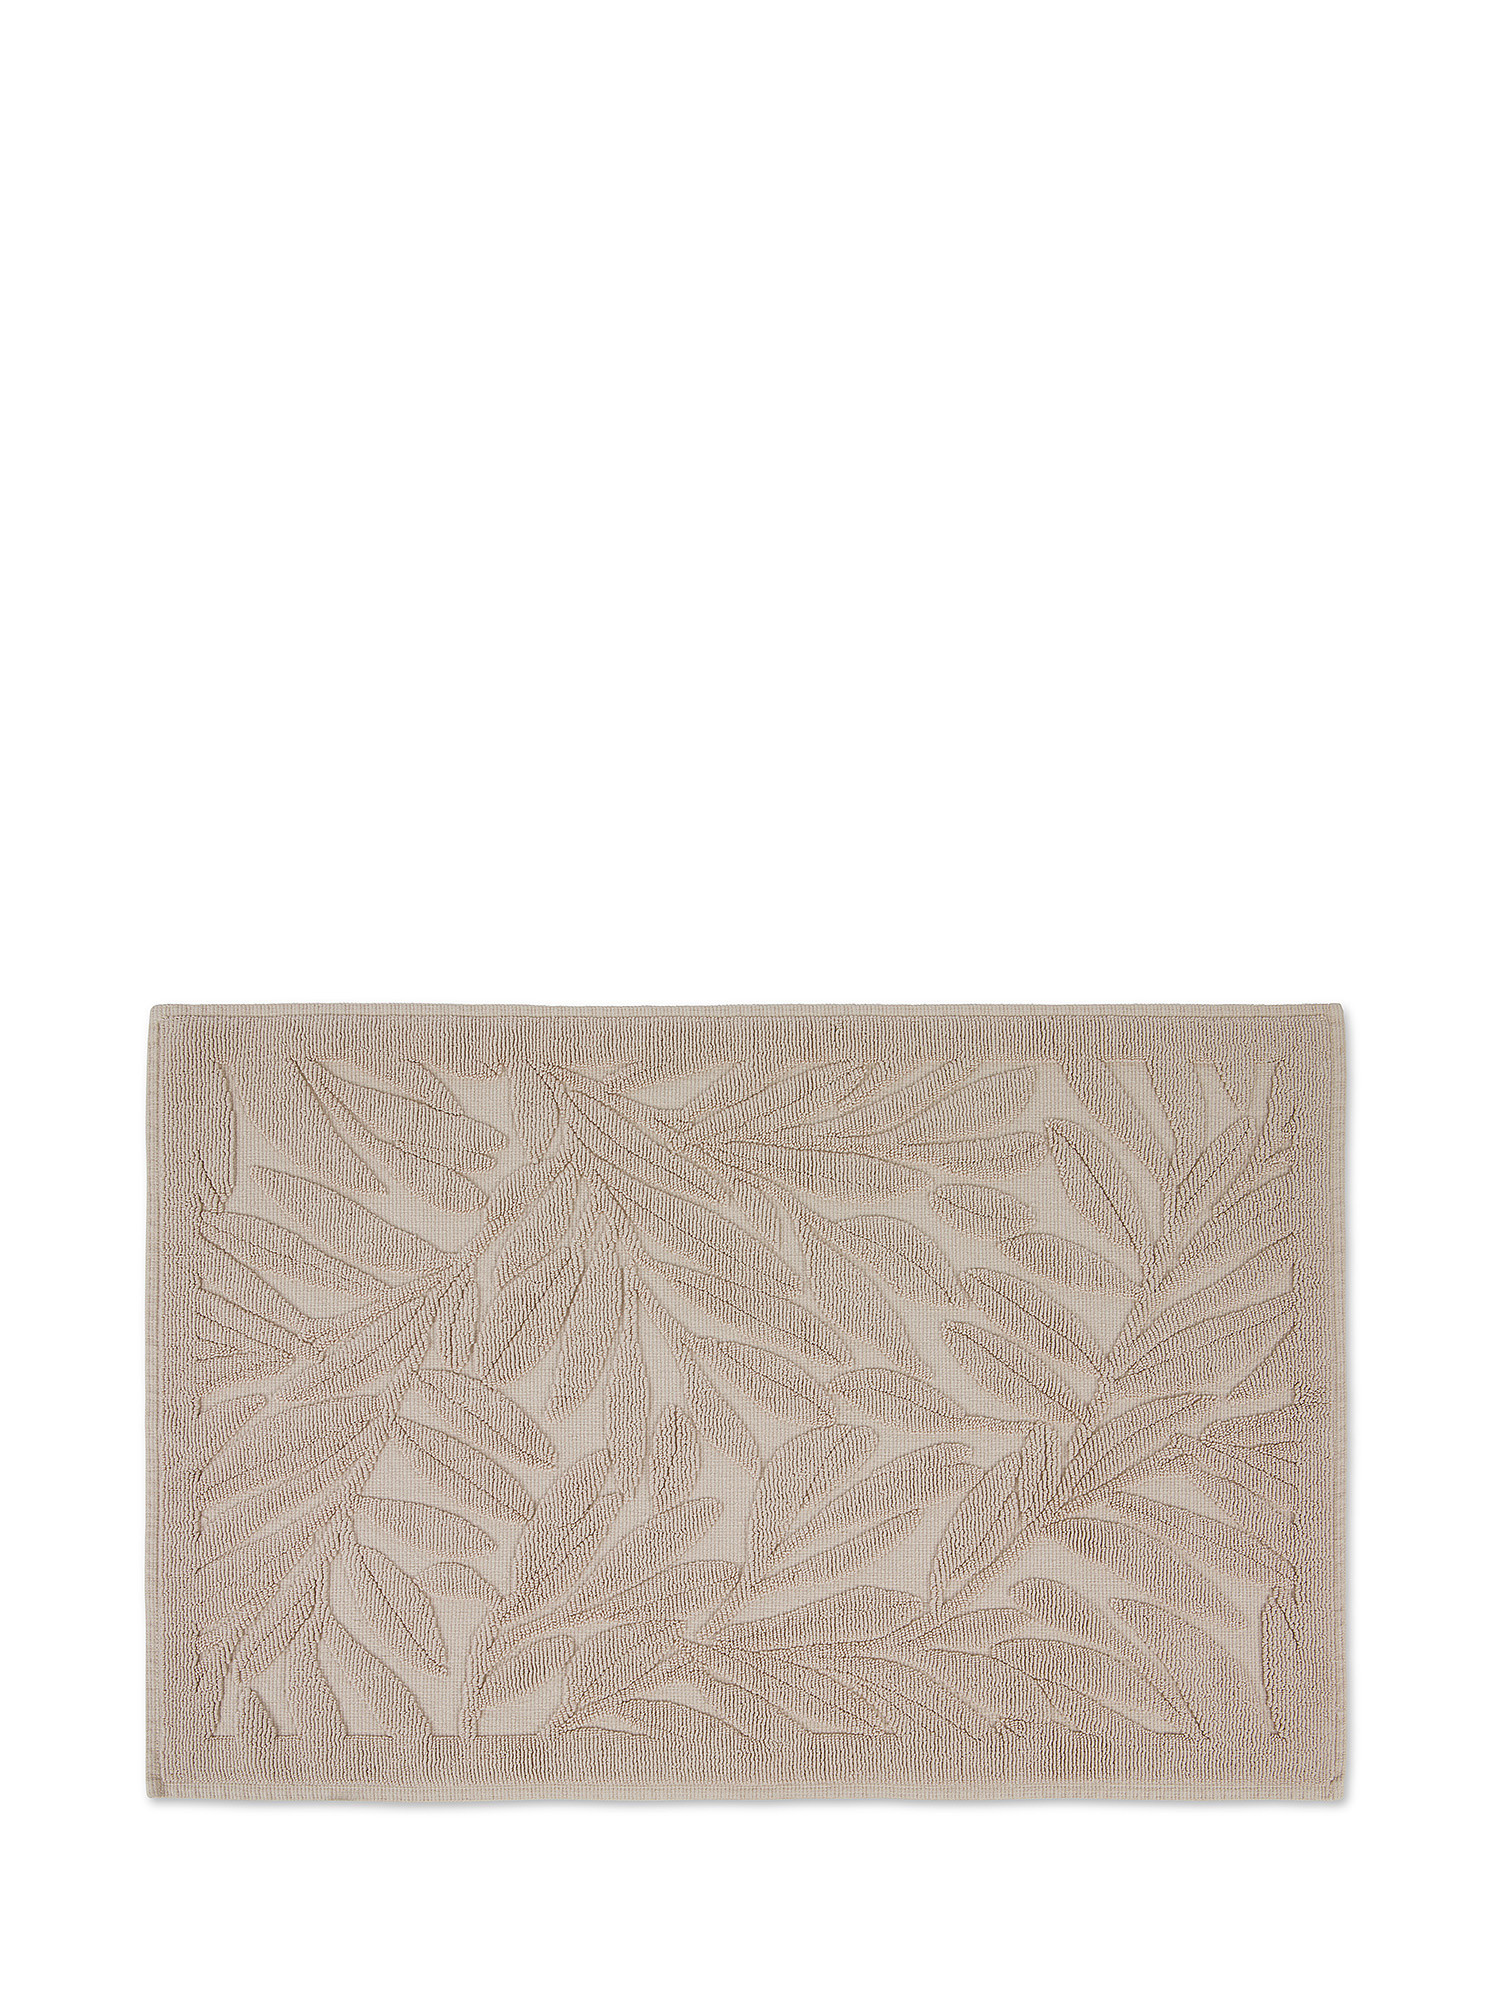 Zefiro solid color cotton shower mat, Beige, large image number 0